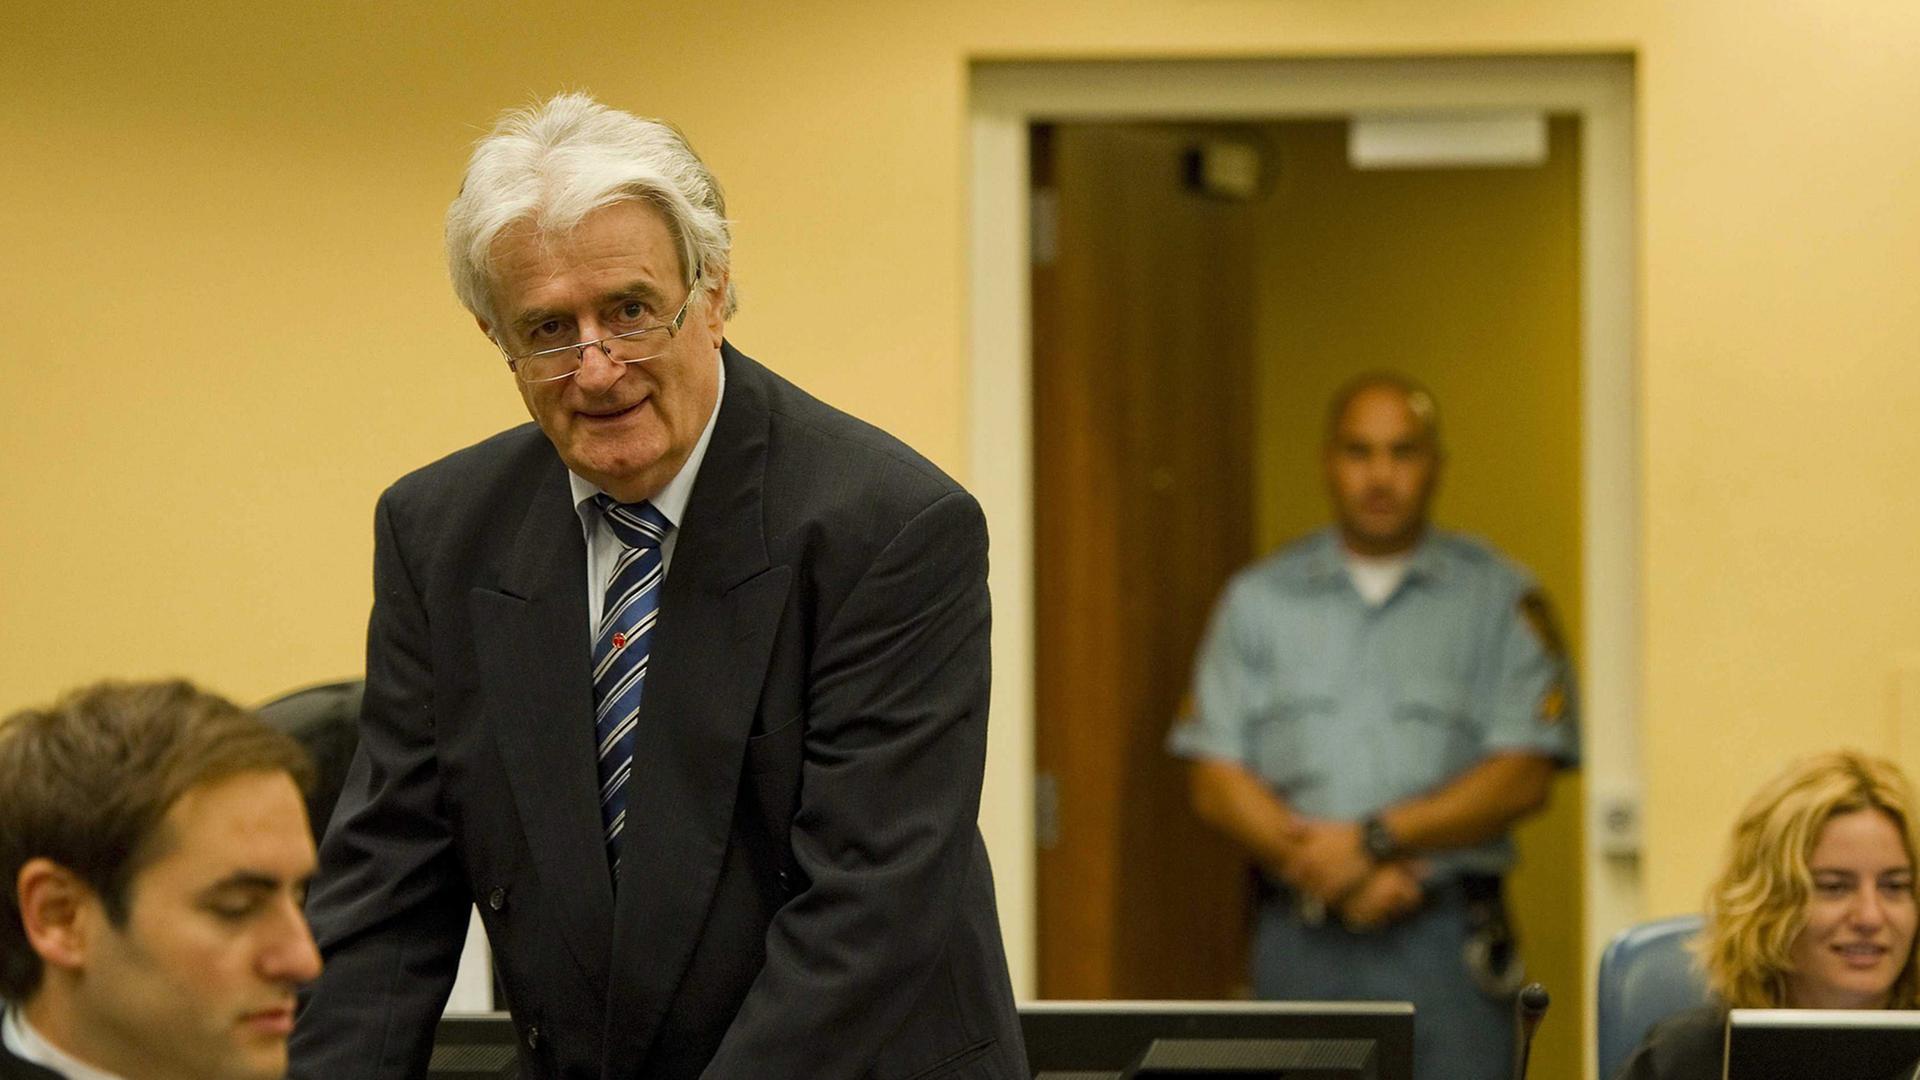 Radovan Karadzic am 16 October 2012 vor dem Gericht in Den Haag